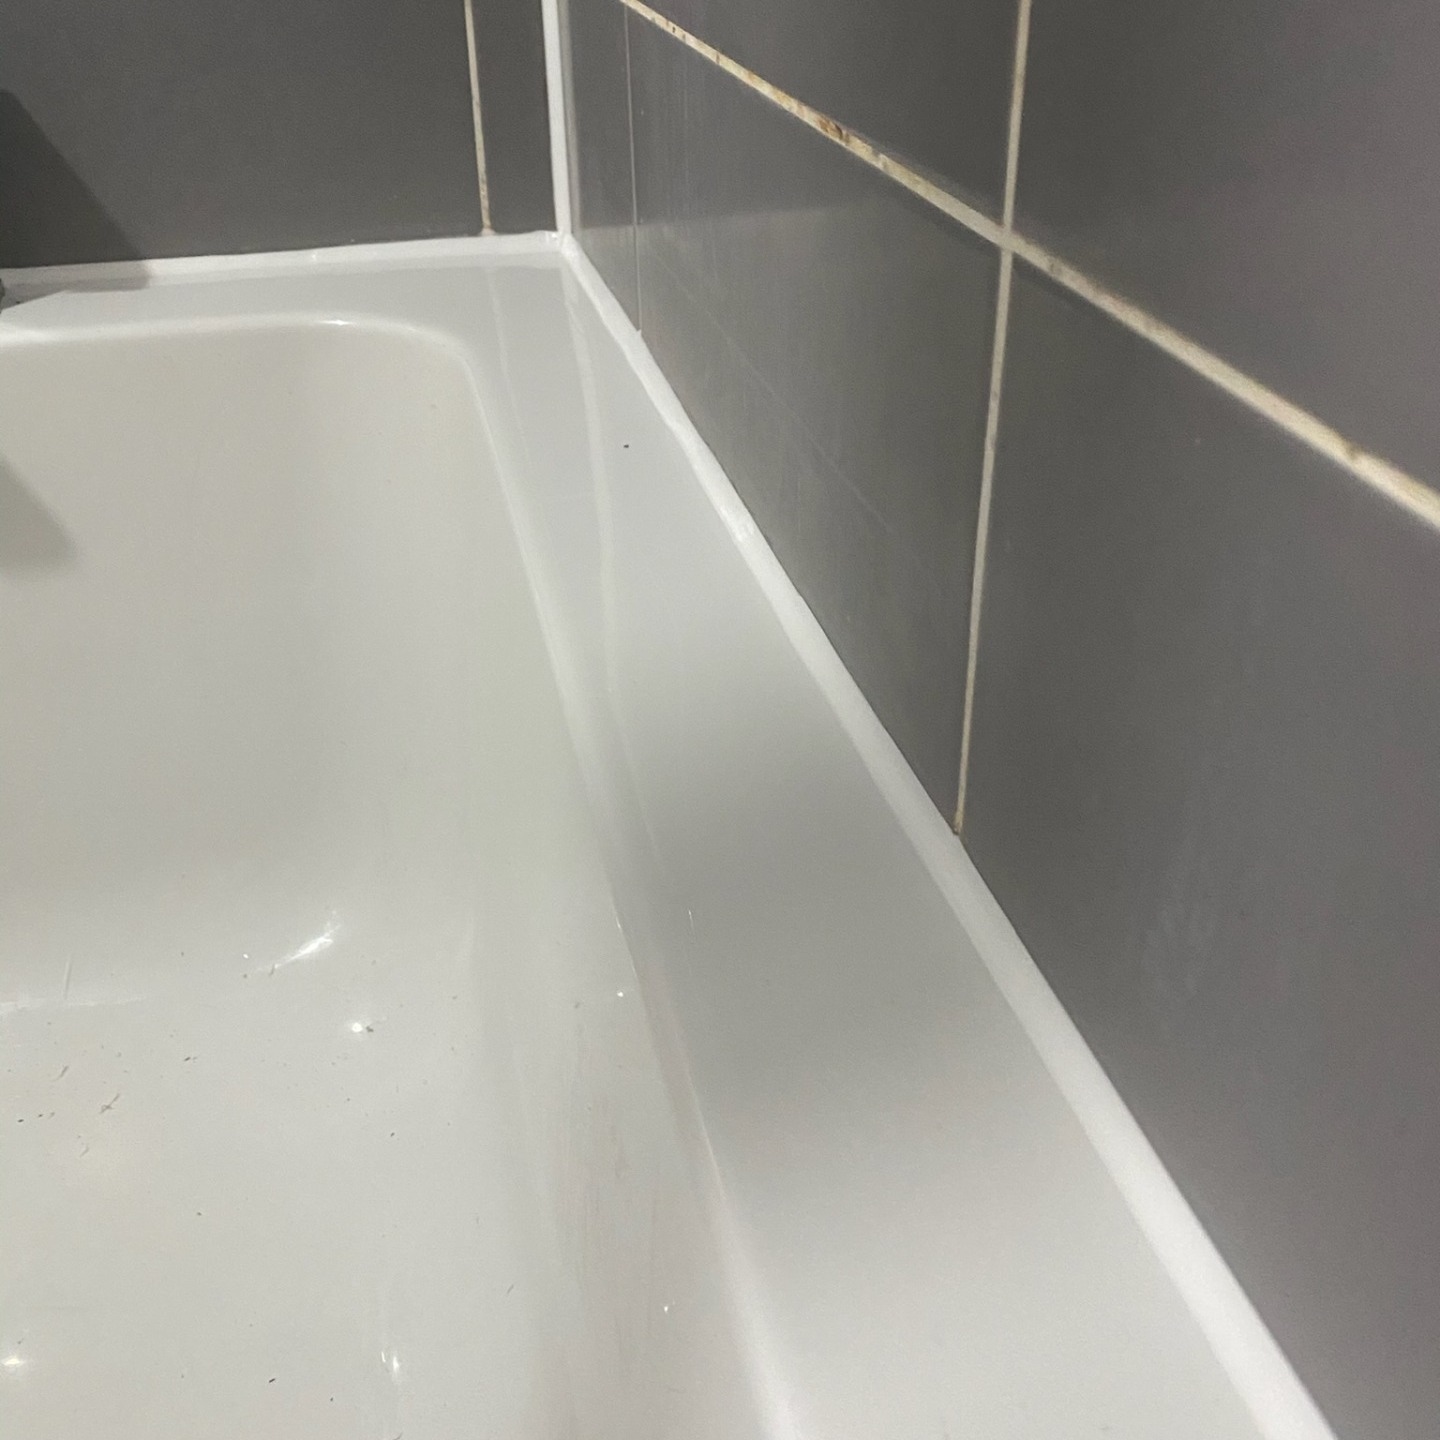 fresh mastic applied to bathtub